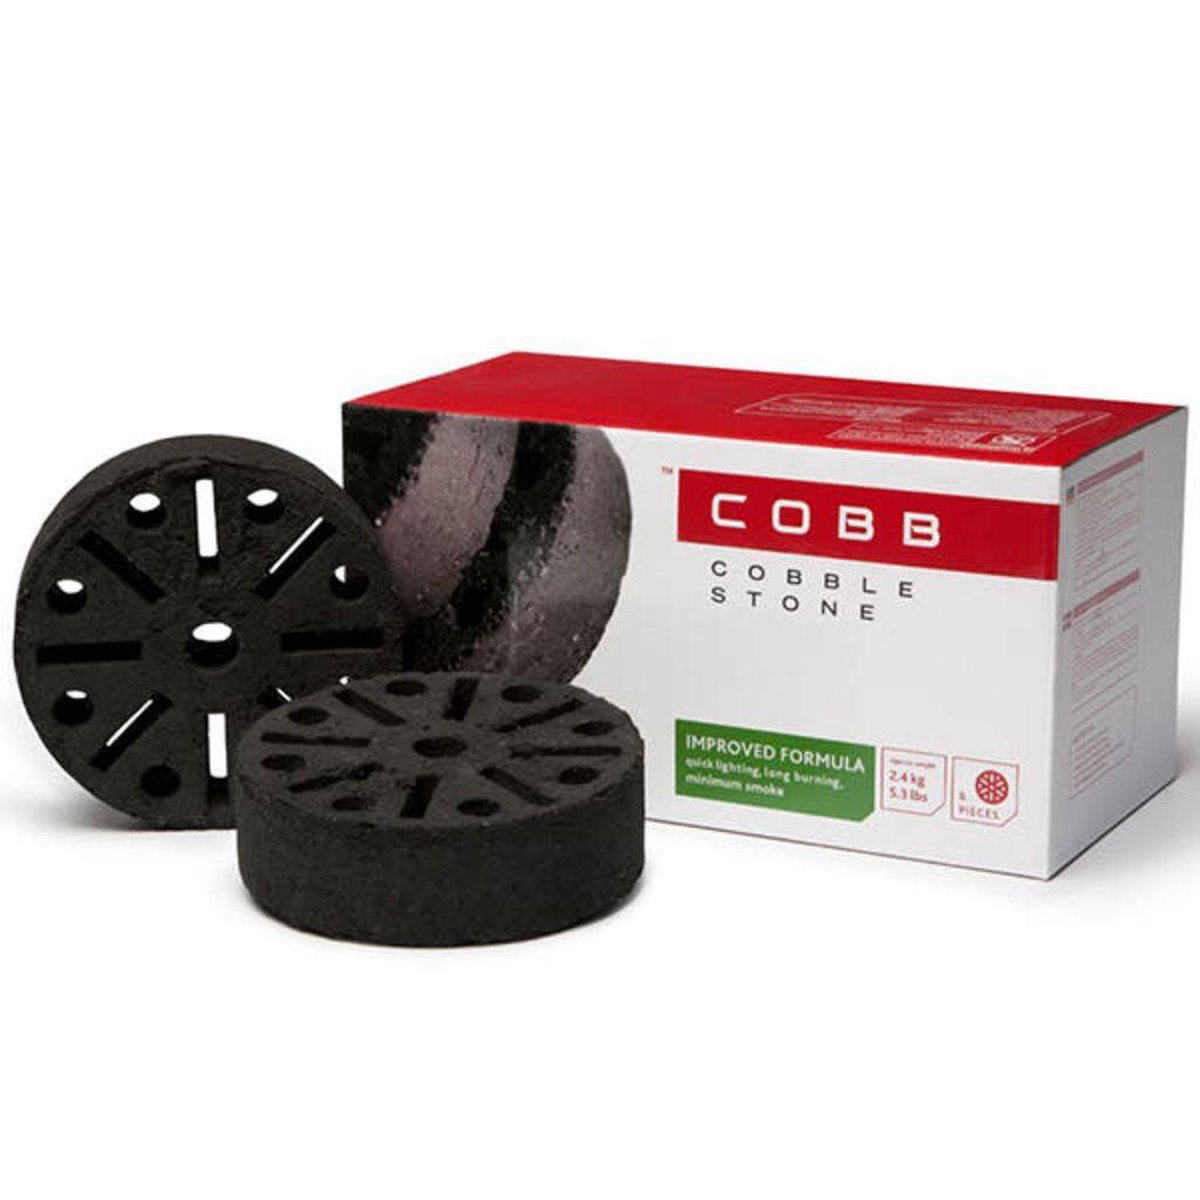 Cobb Cobble Stones - 6 stuks - Cobb